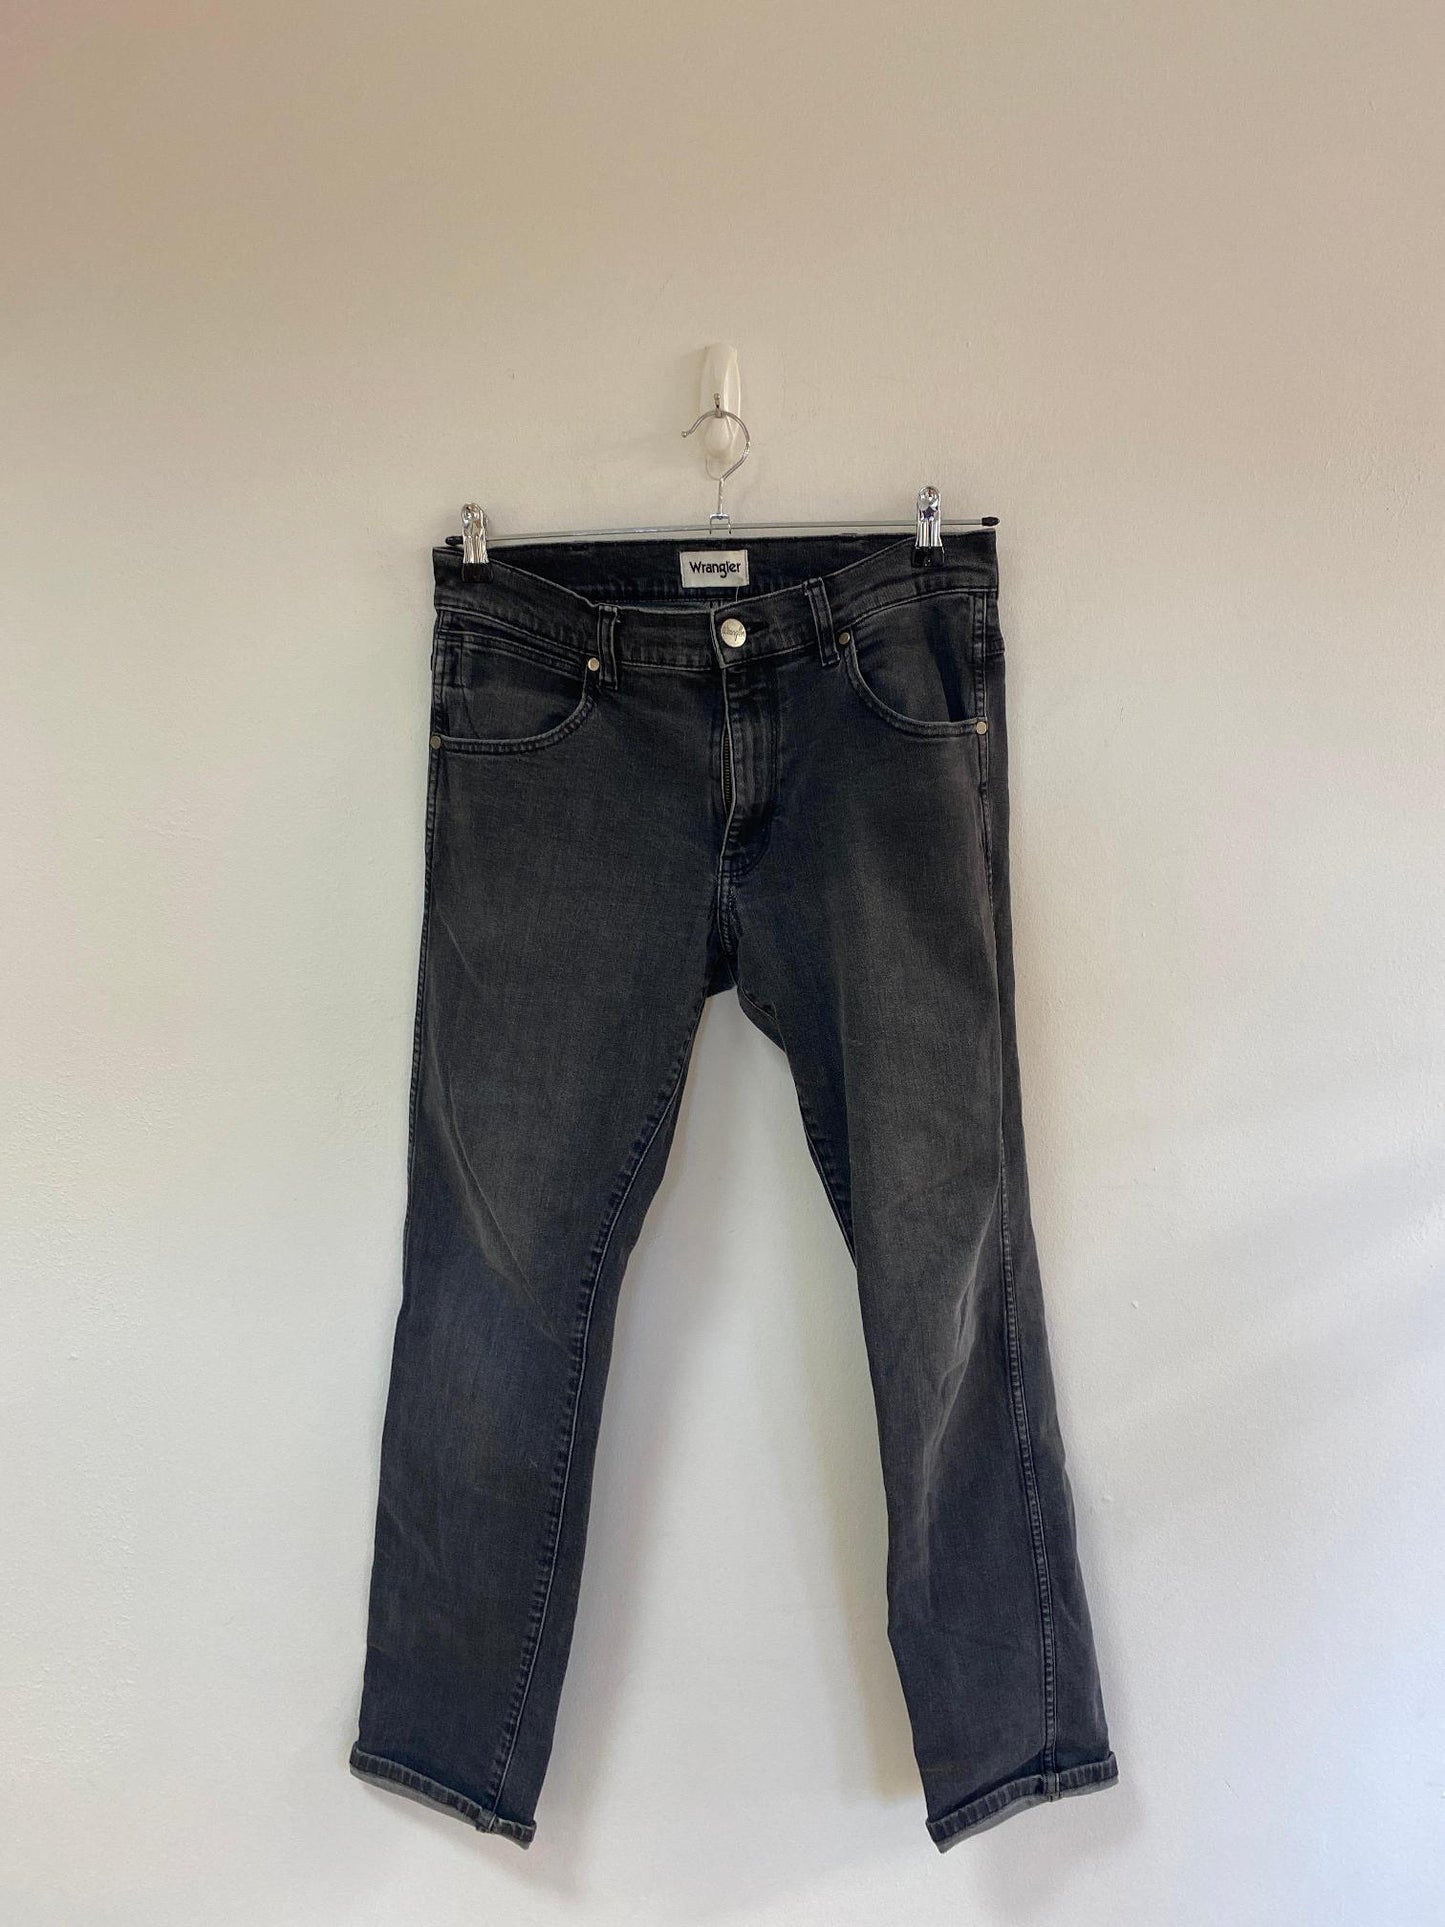 Black mid rise straight leg jeans, Wrangler, size 12 - Damaged Item Sale